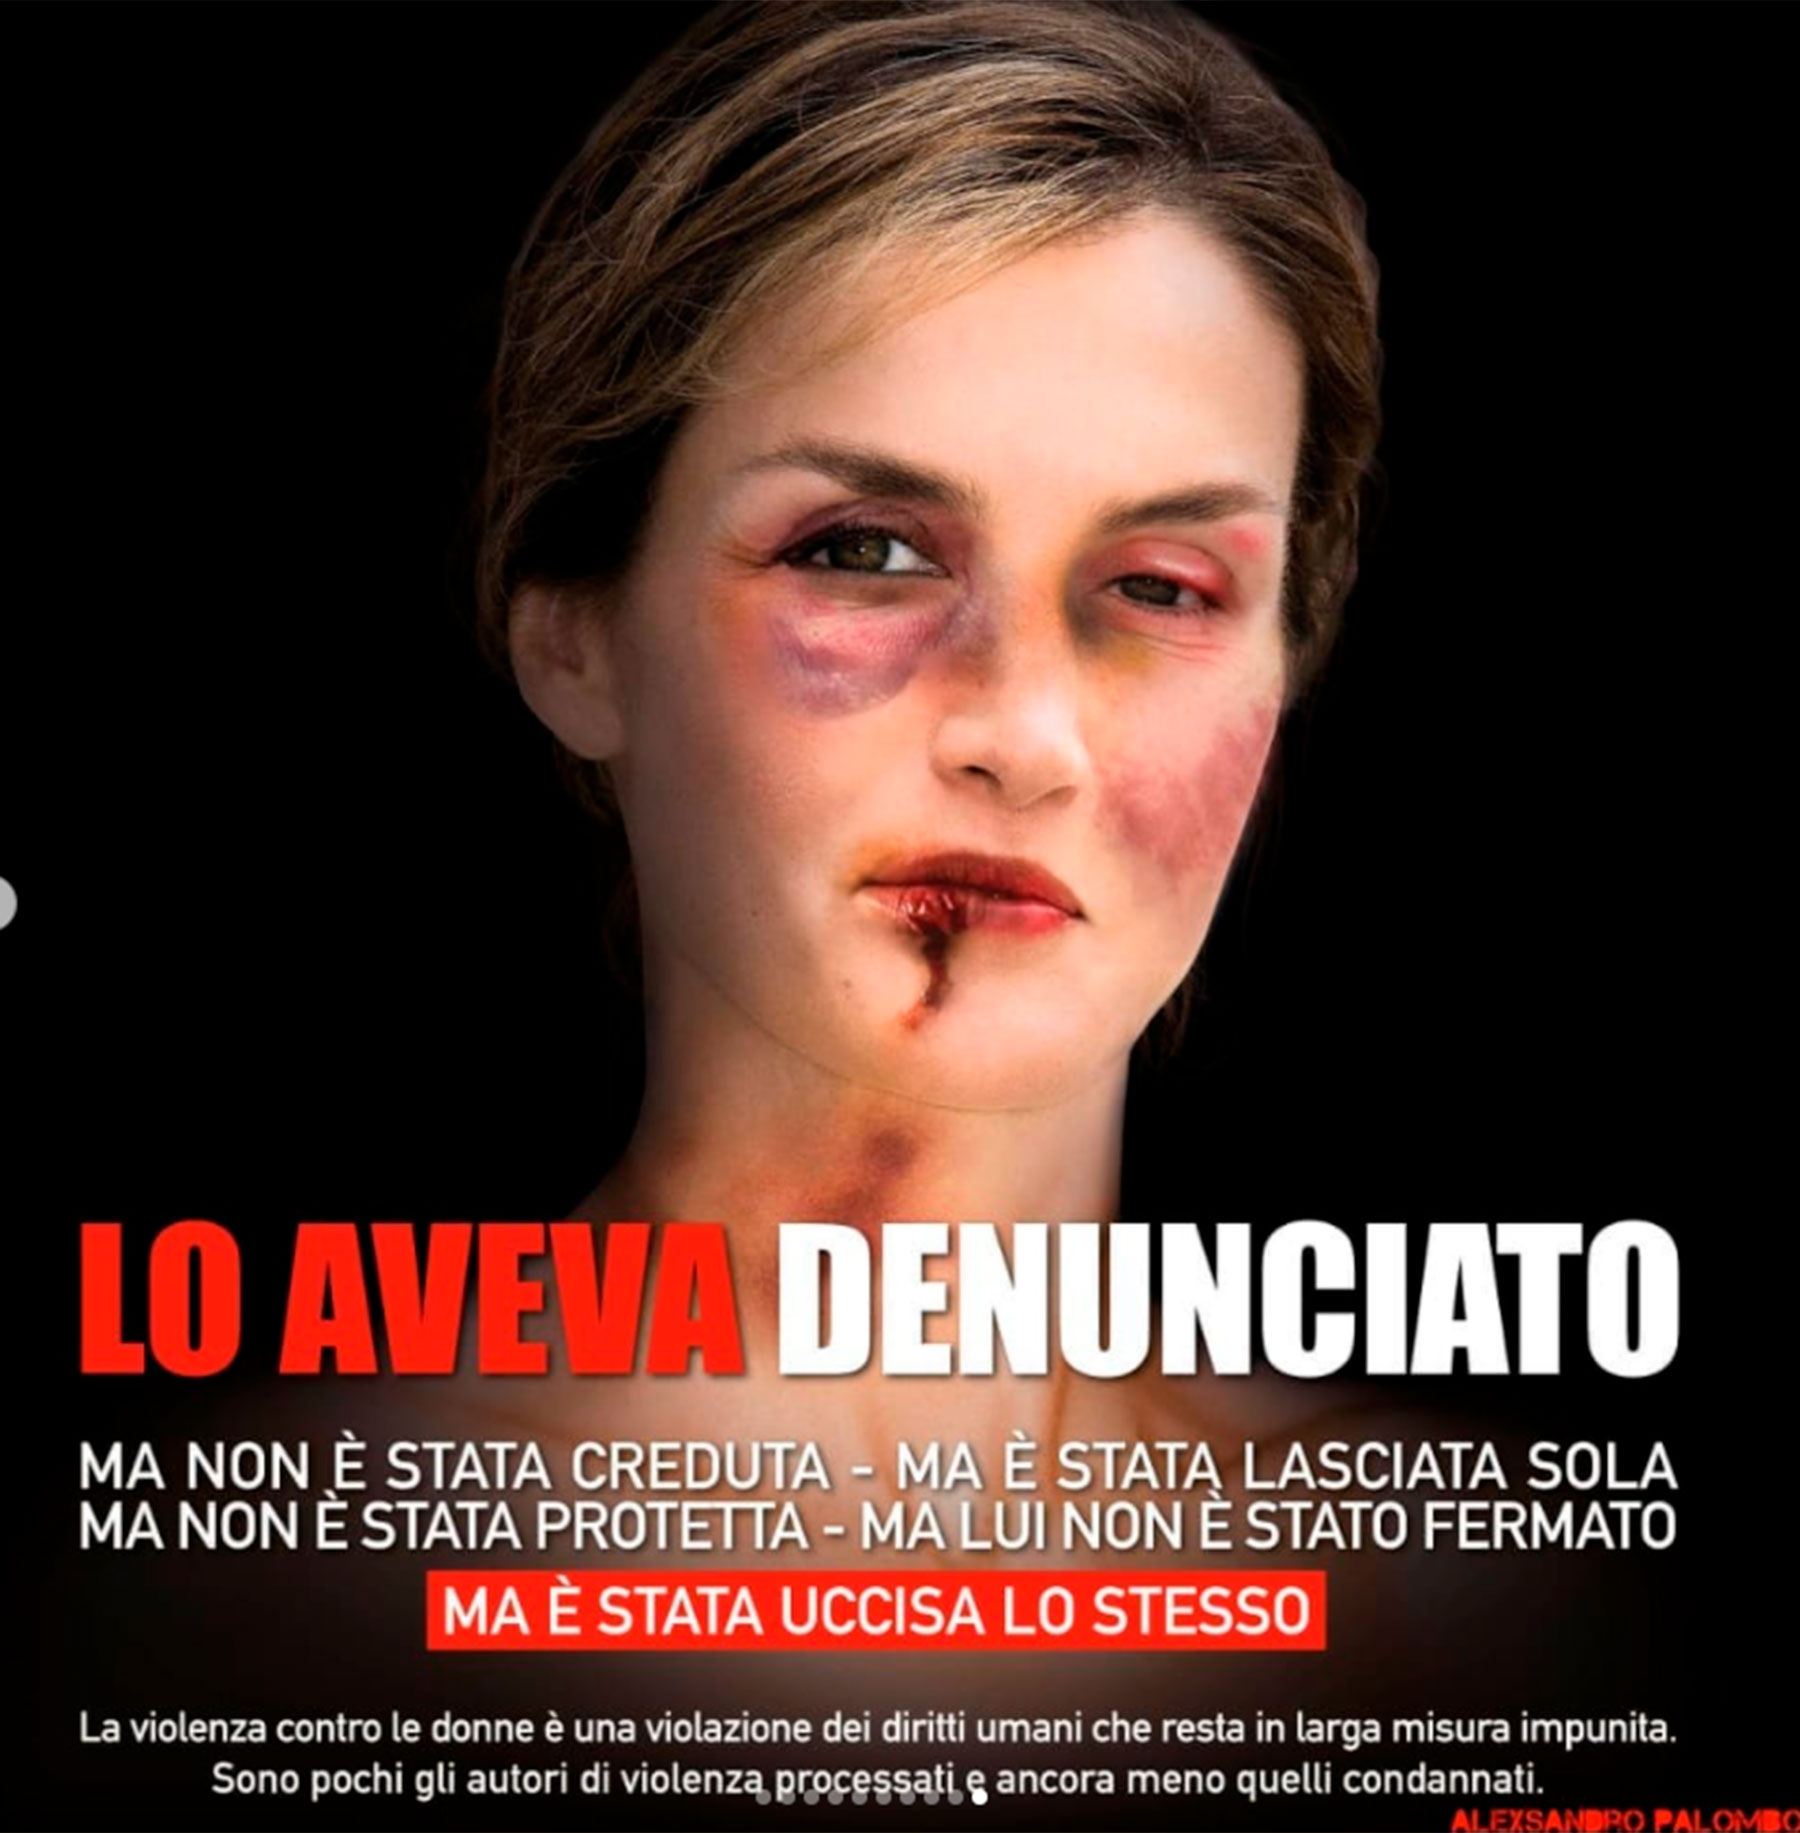 Cartel que muestra a la Reina Letizia / AleXsandro Palombo